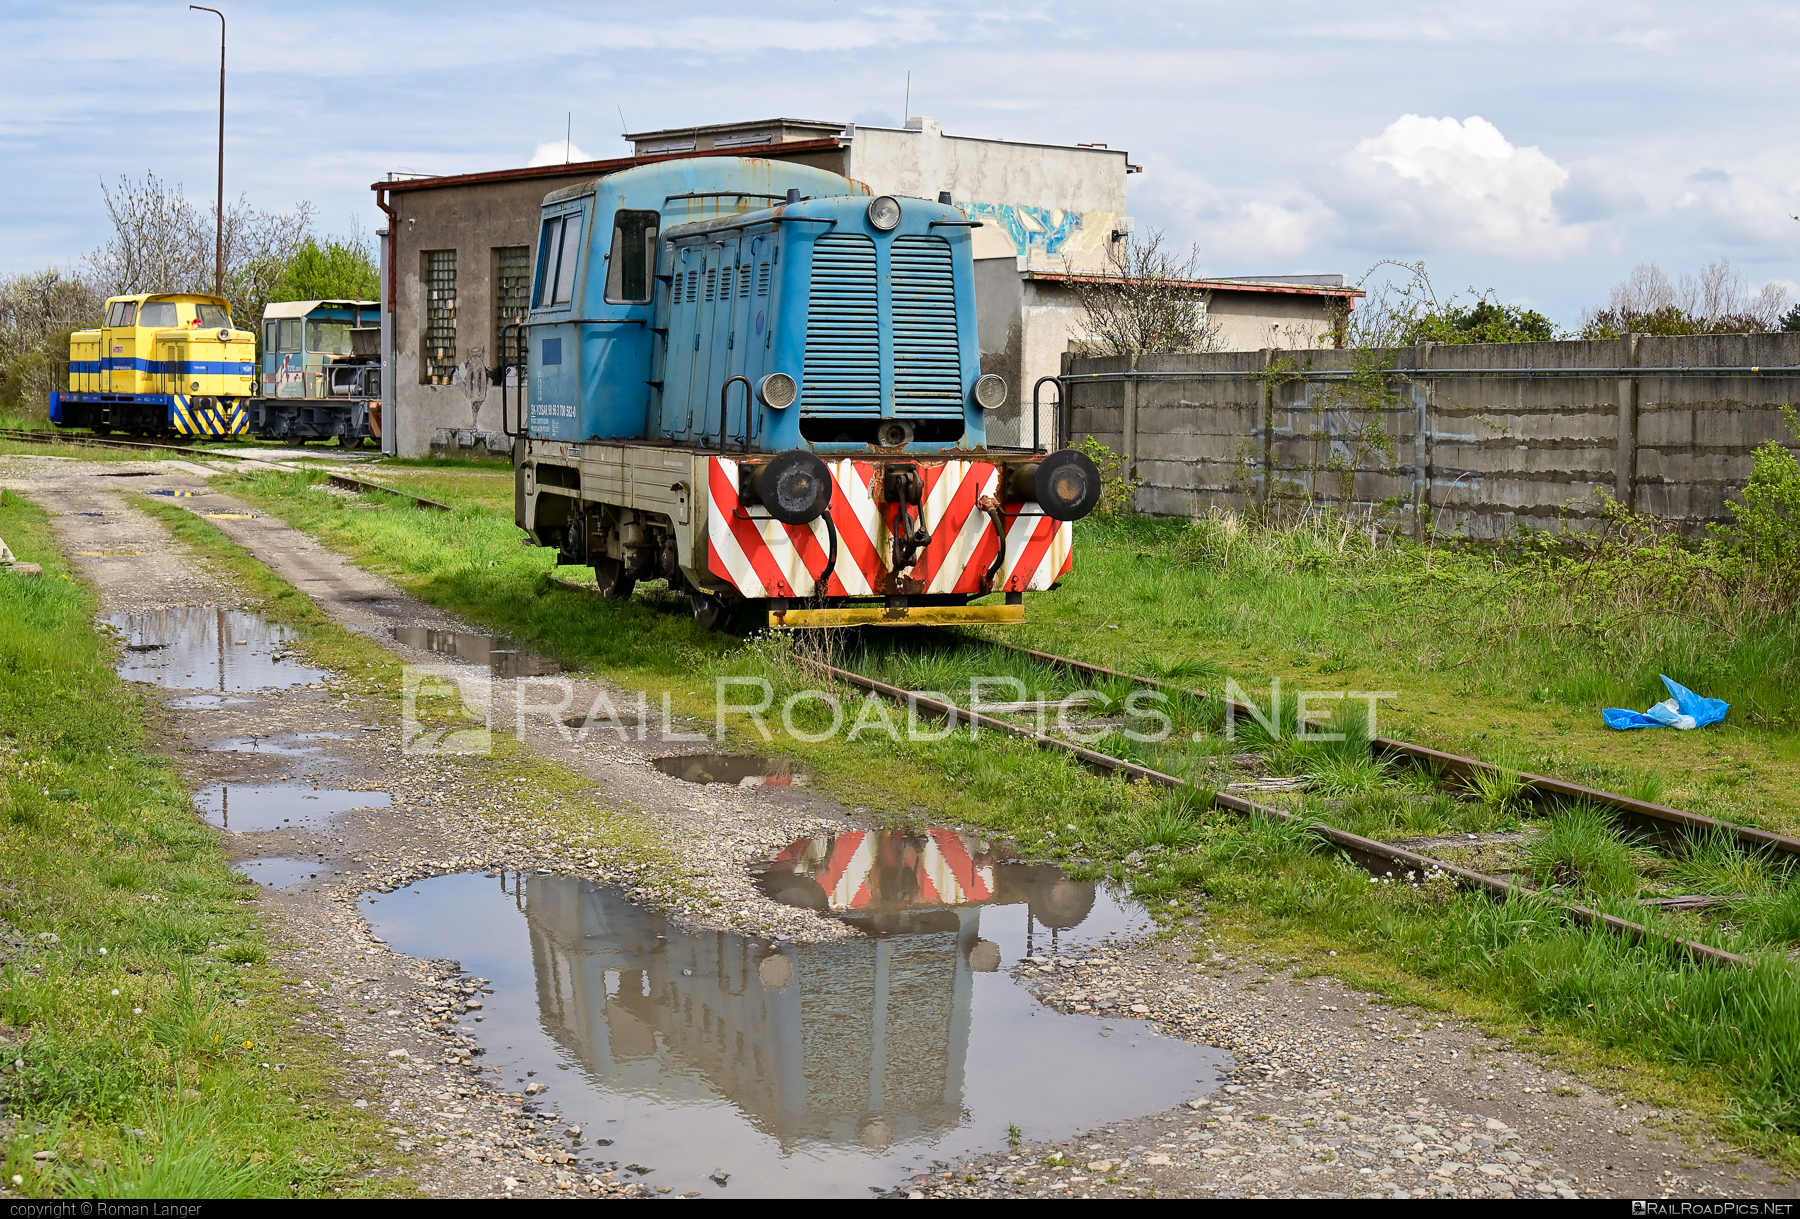 ČKD T 211.0 (700) - 700 582-0 operated by Yosaria Trains, a.s. #ckd #ckd2110 #ckd700 #ckdclass700 #ckdt2110 #locomotive700 #locomotivet211 #prasa #prasiatko #yosar #yosaria